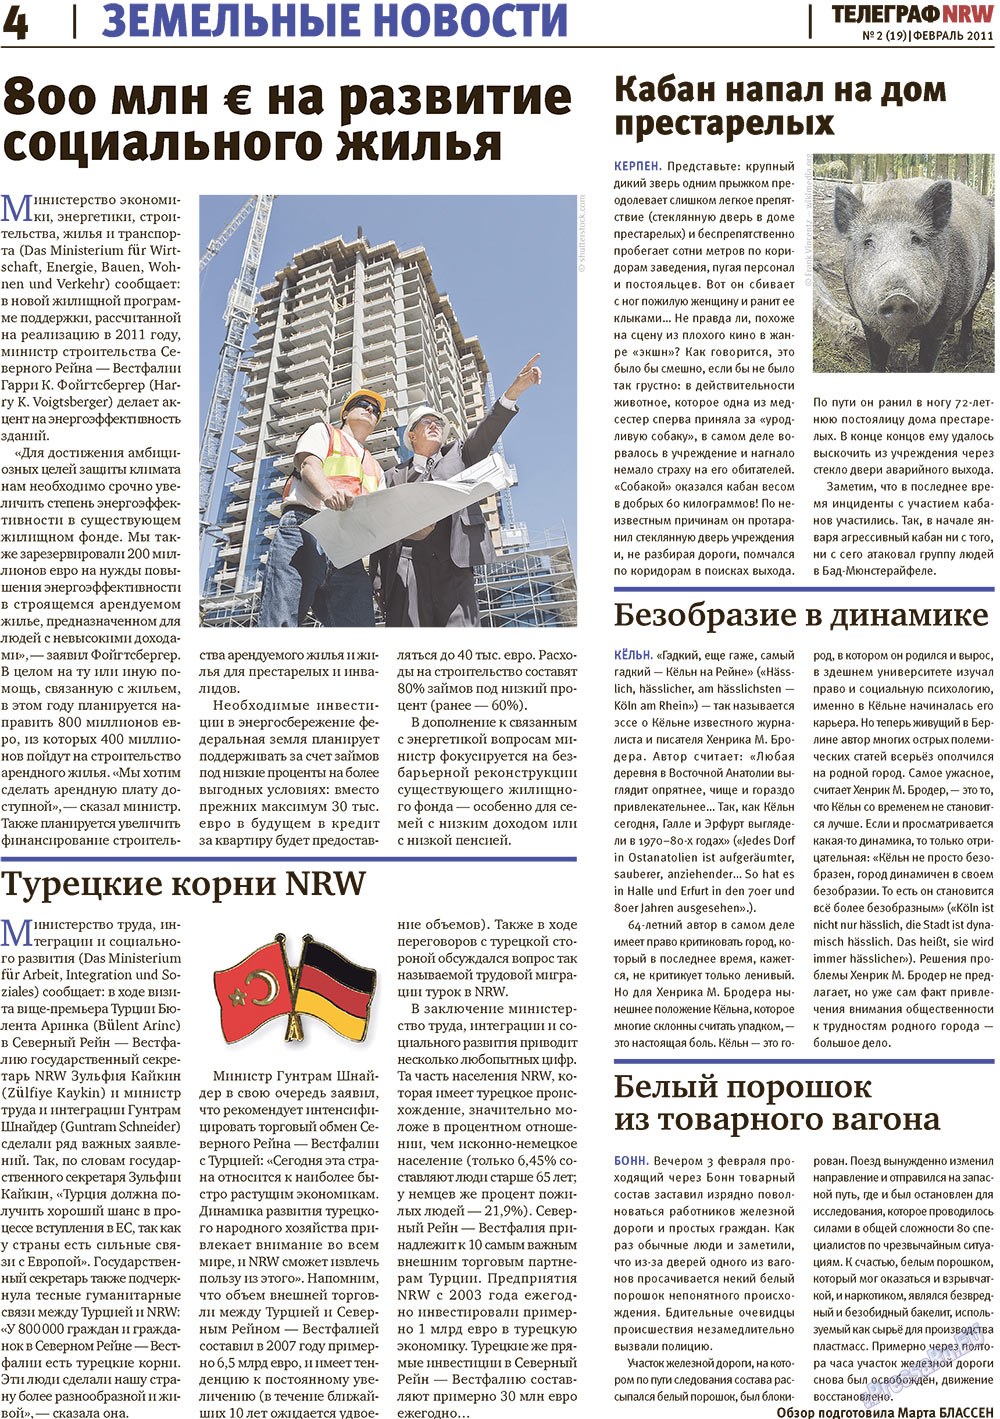 Телеграф NRW, газета. 2011 №2 стр.4